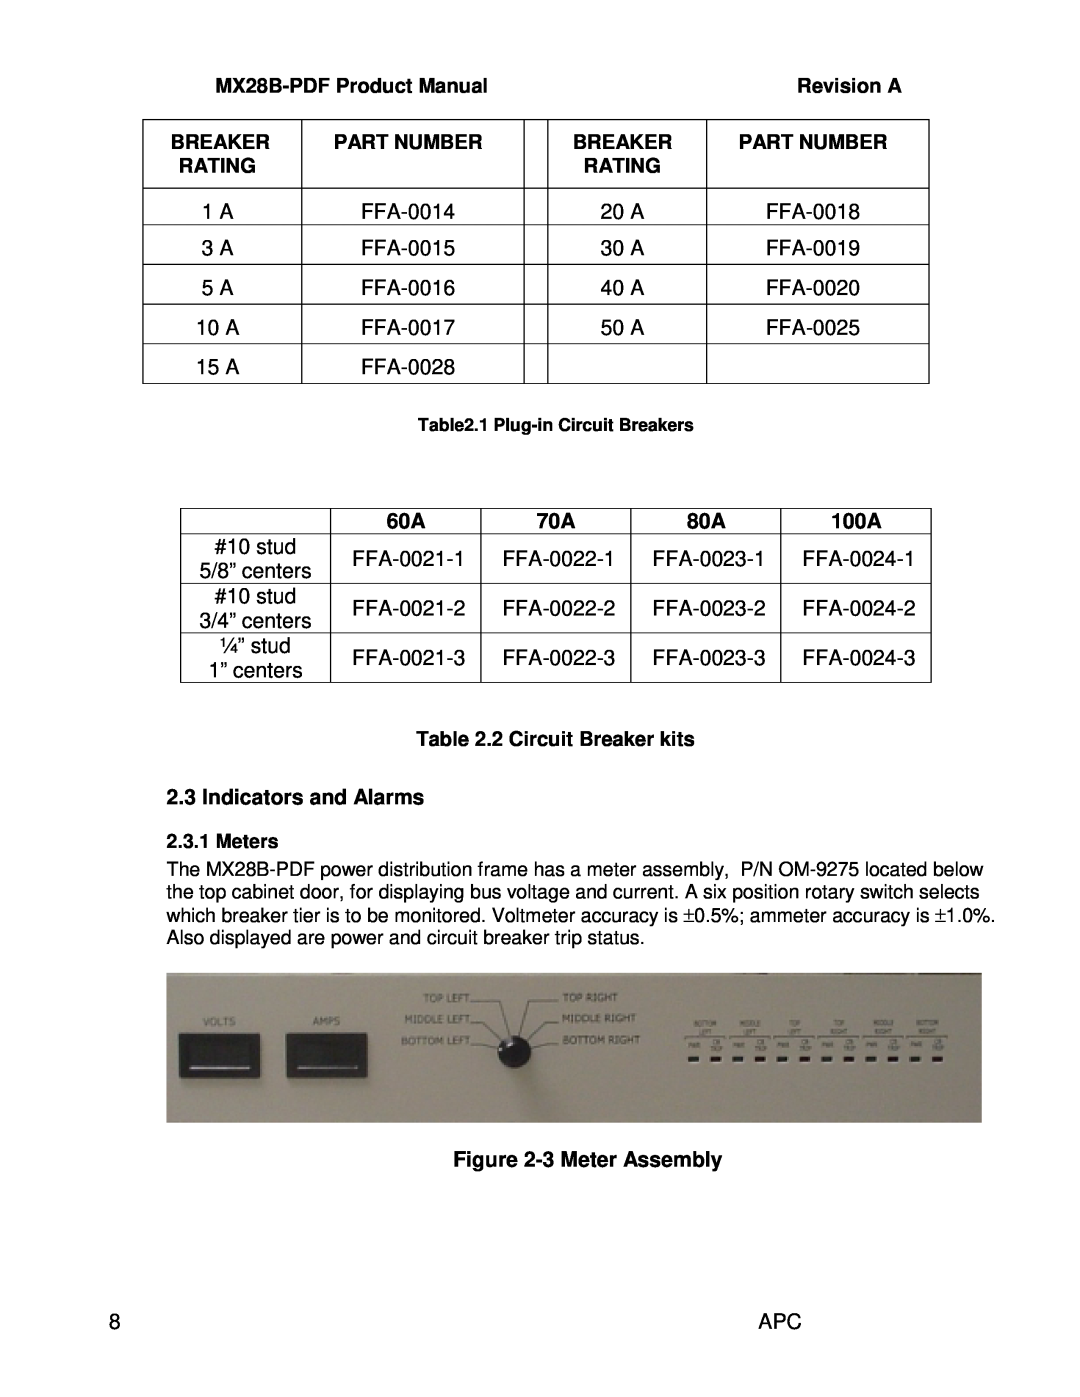 American Power Conversion MX28B-PDF manual 100A, Indicators and Alarms, 3 Meter Assembly, 1 Plug-in Circuit Breakers 